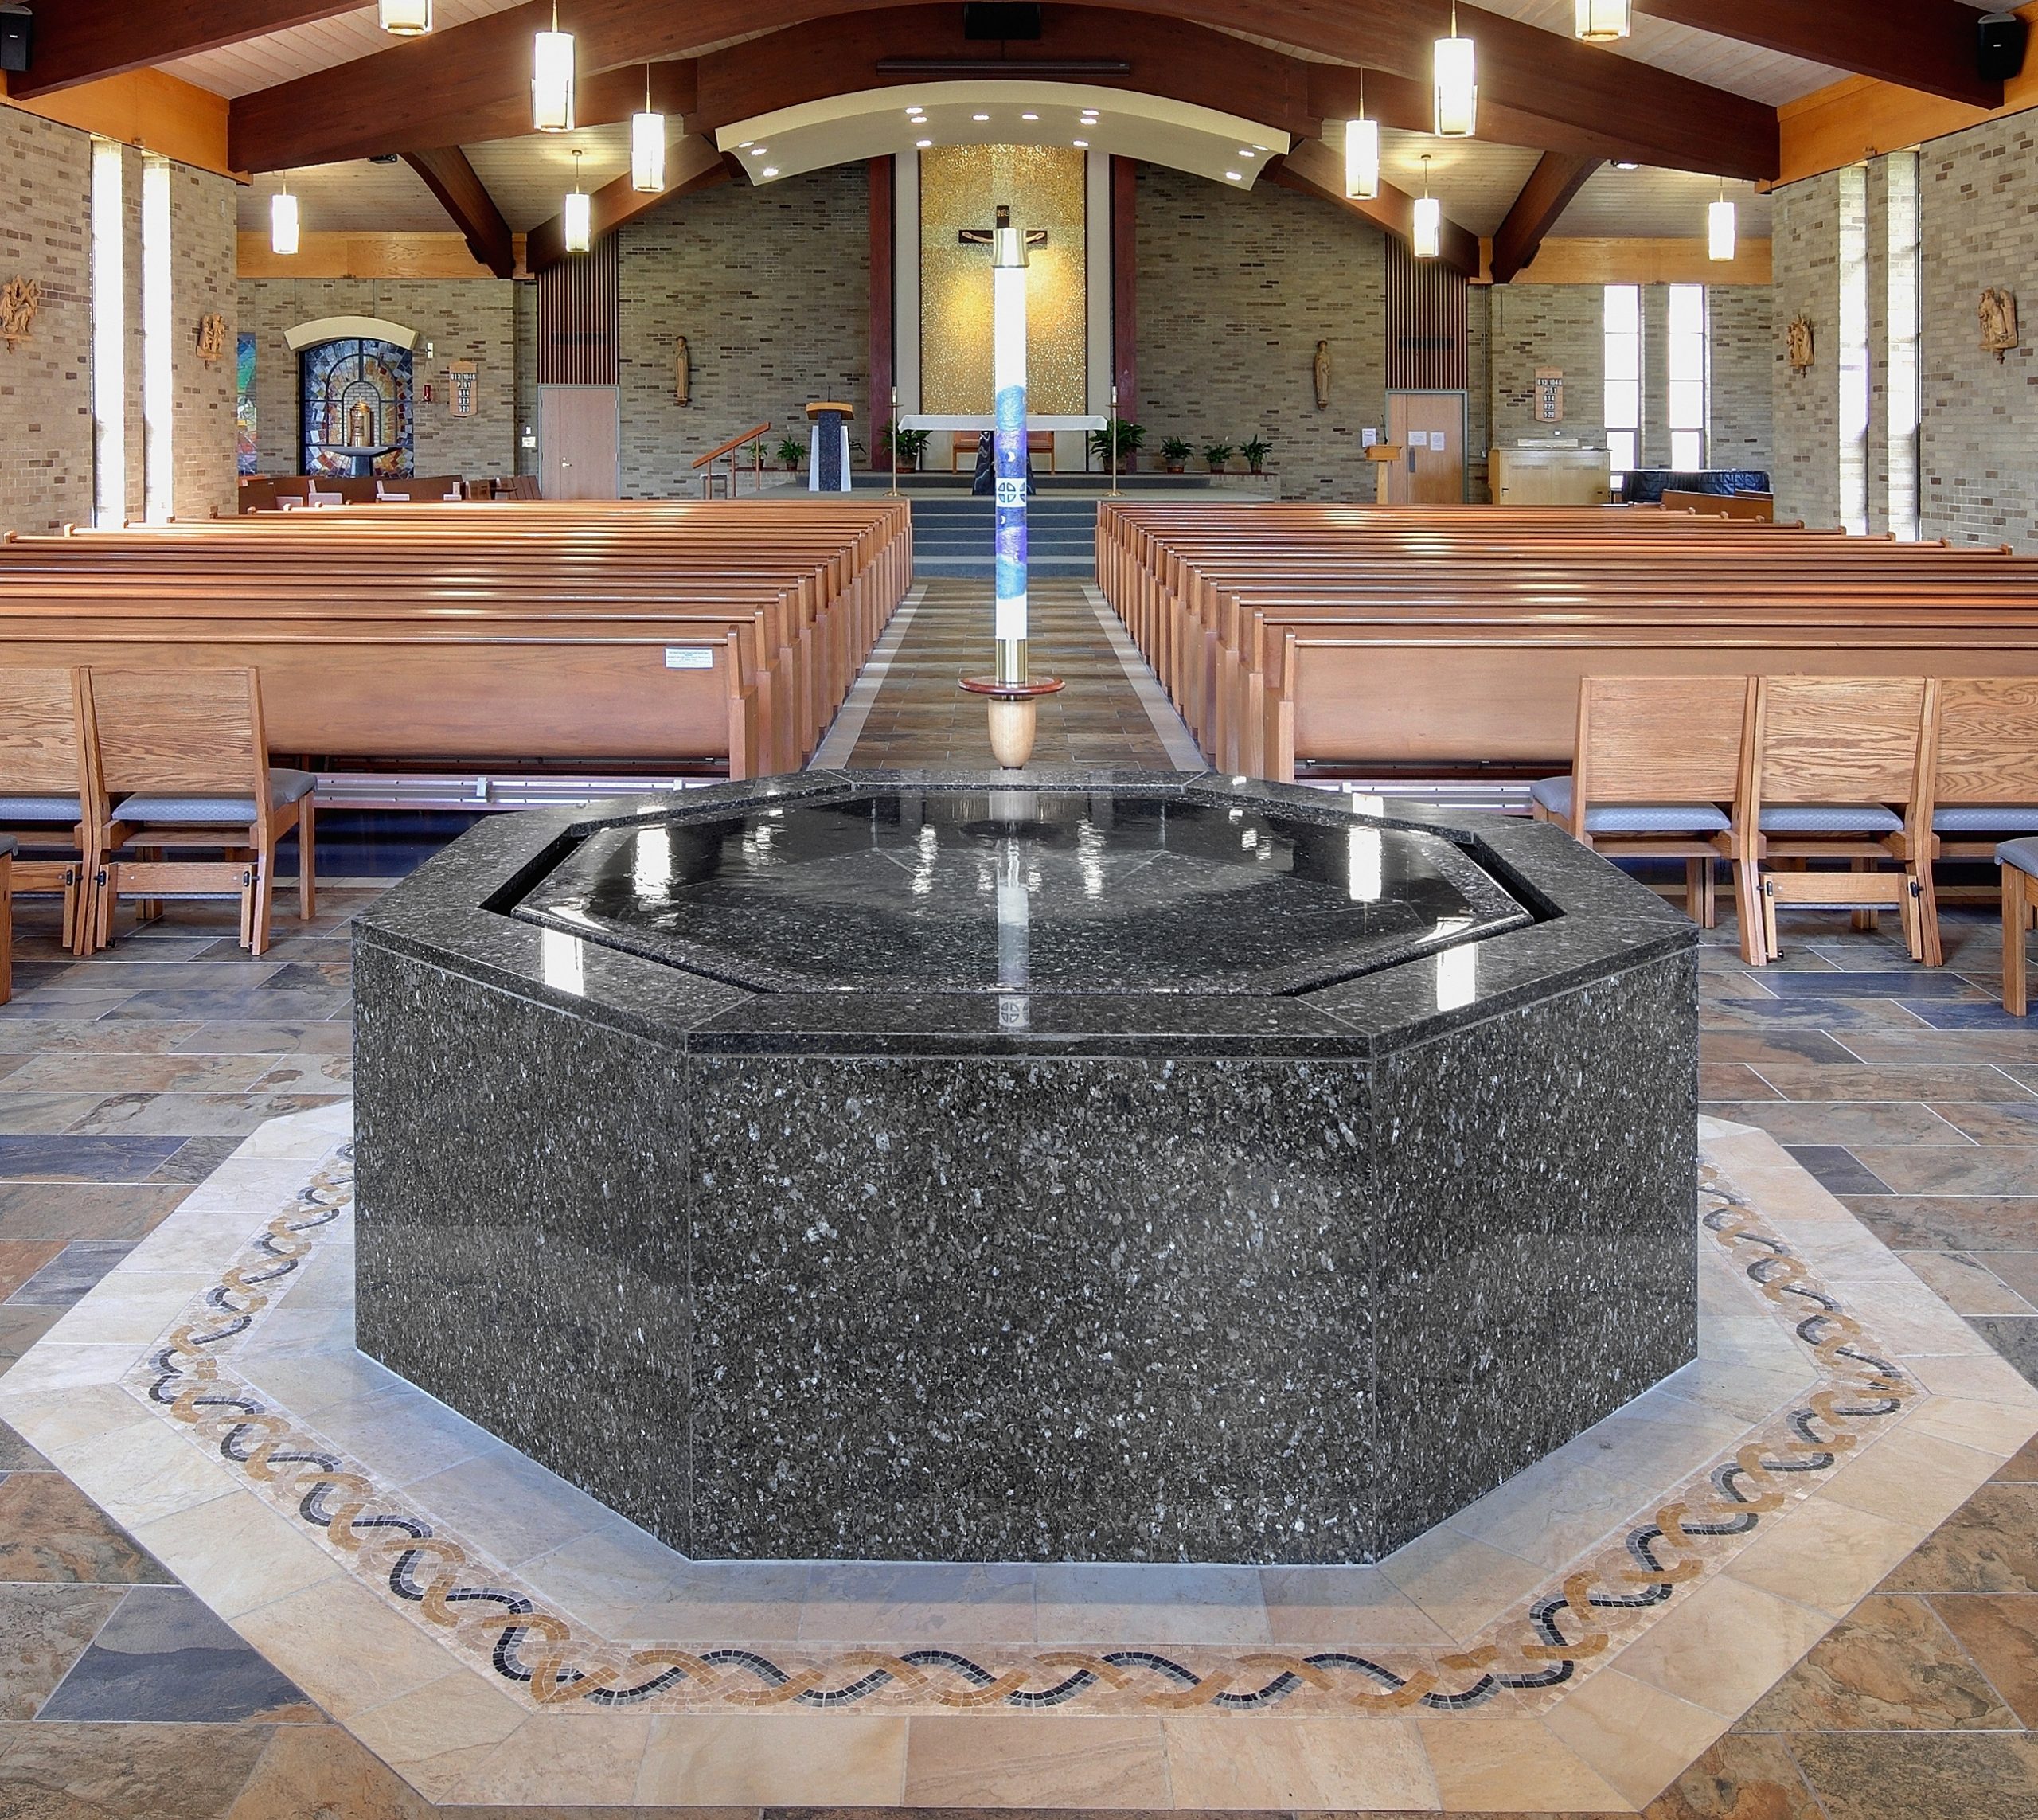 Single Level Octagonal Negative Edge Baptismal Font Pool, St. Joseph's Church, Penfield, NY.